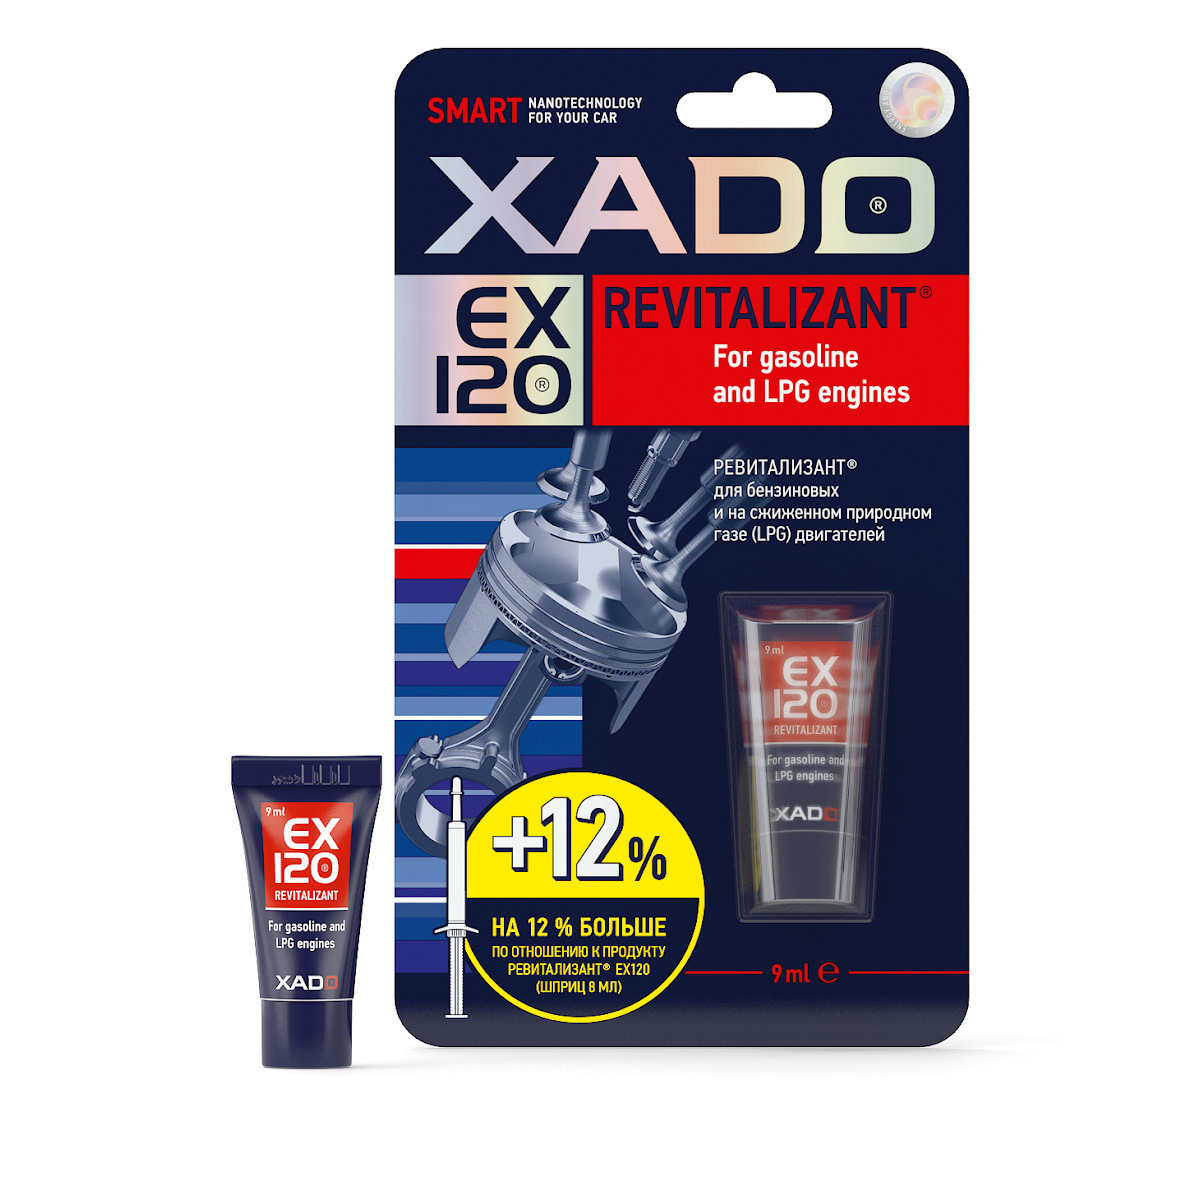 Присадка в моторное масло - XADO Revitalizant ЕХ 120, 9мл